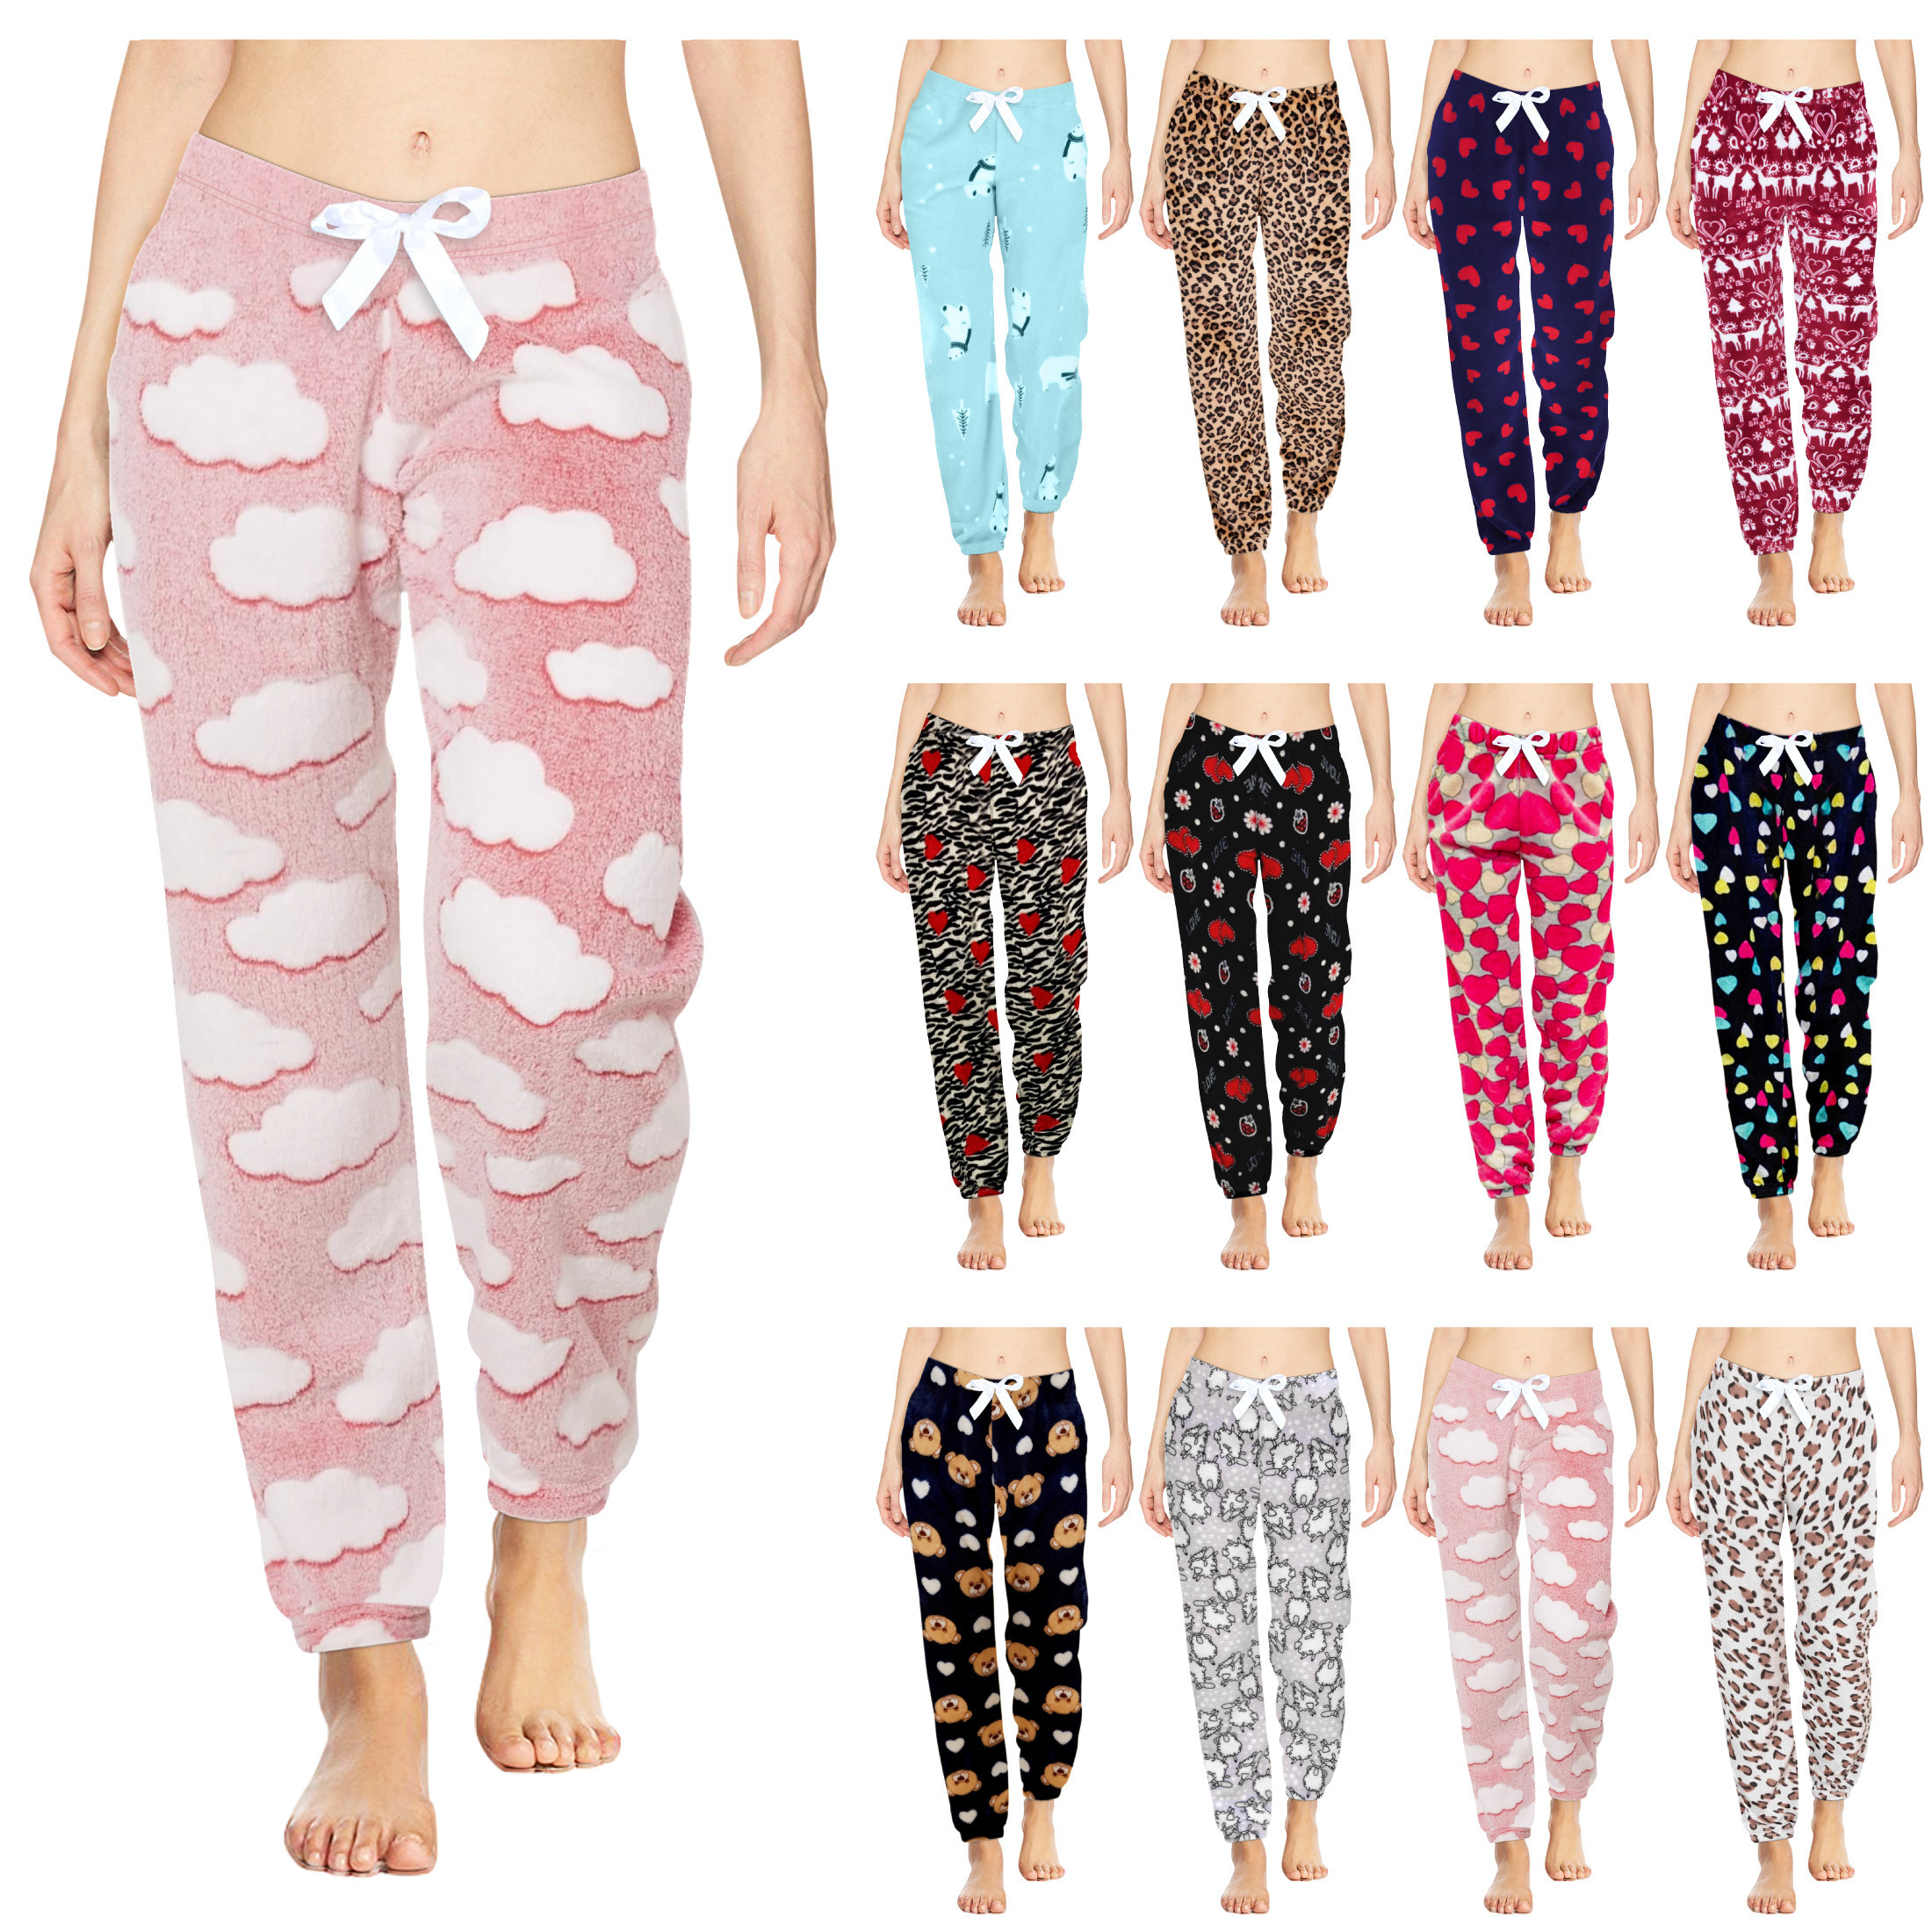 3-Pack: Women's Ultra-Plush Micro Fleece Fuzzy Pajama Pants - Solid, Large